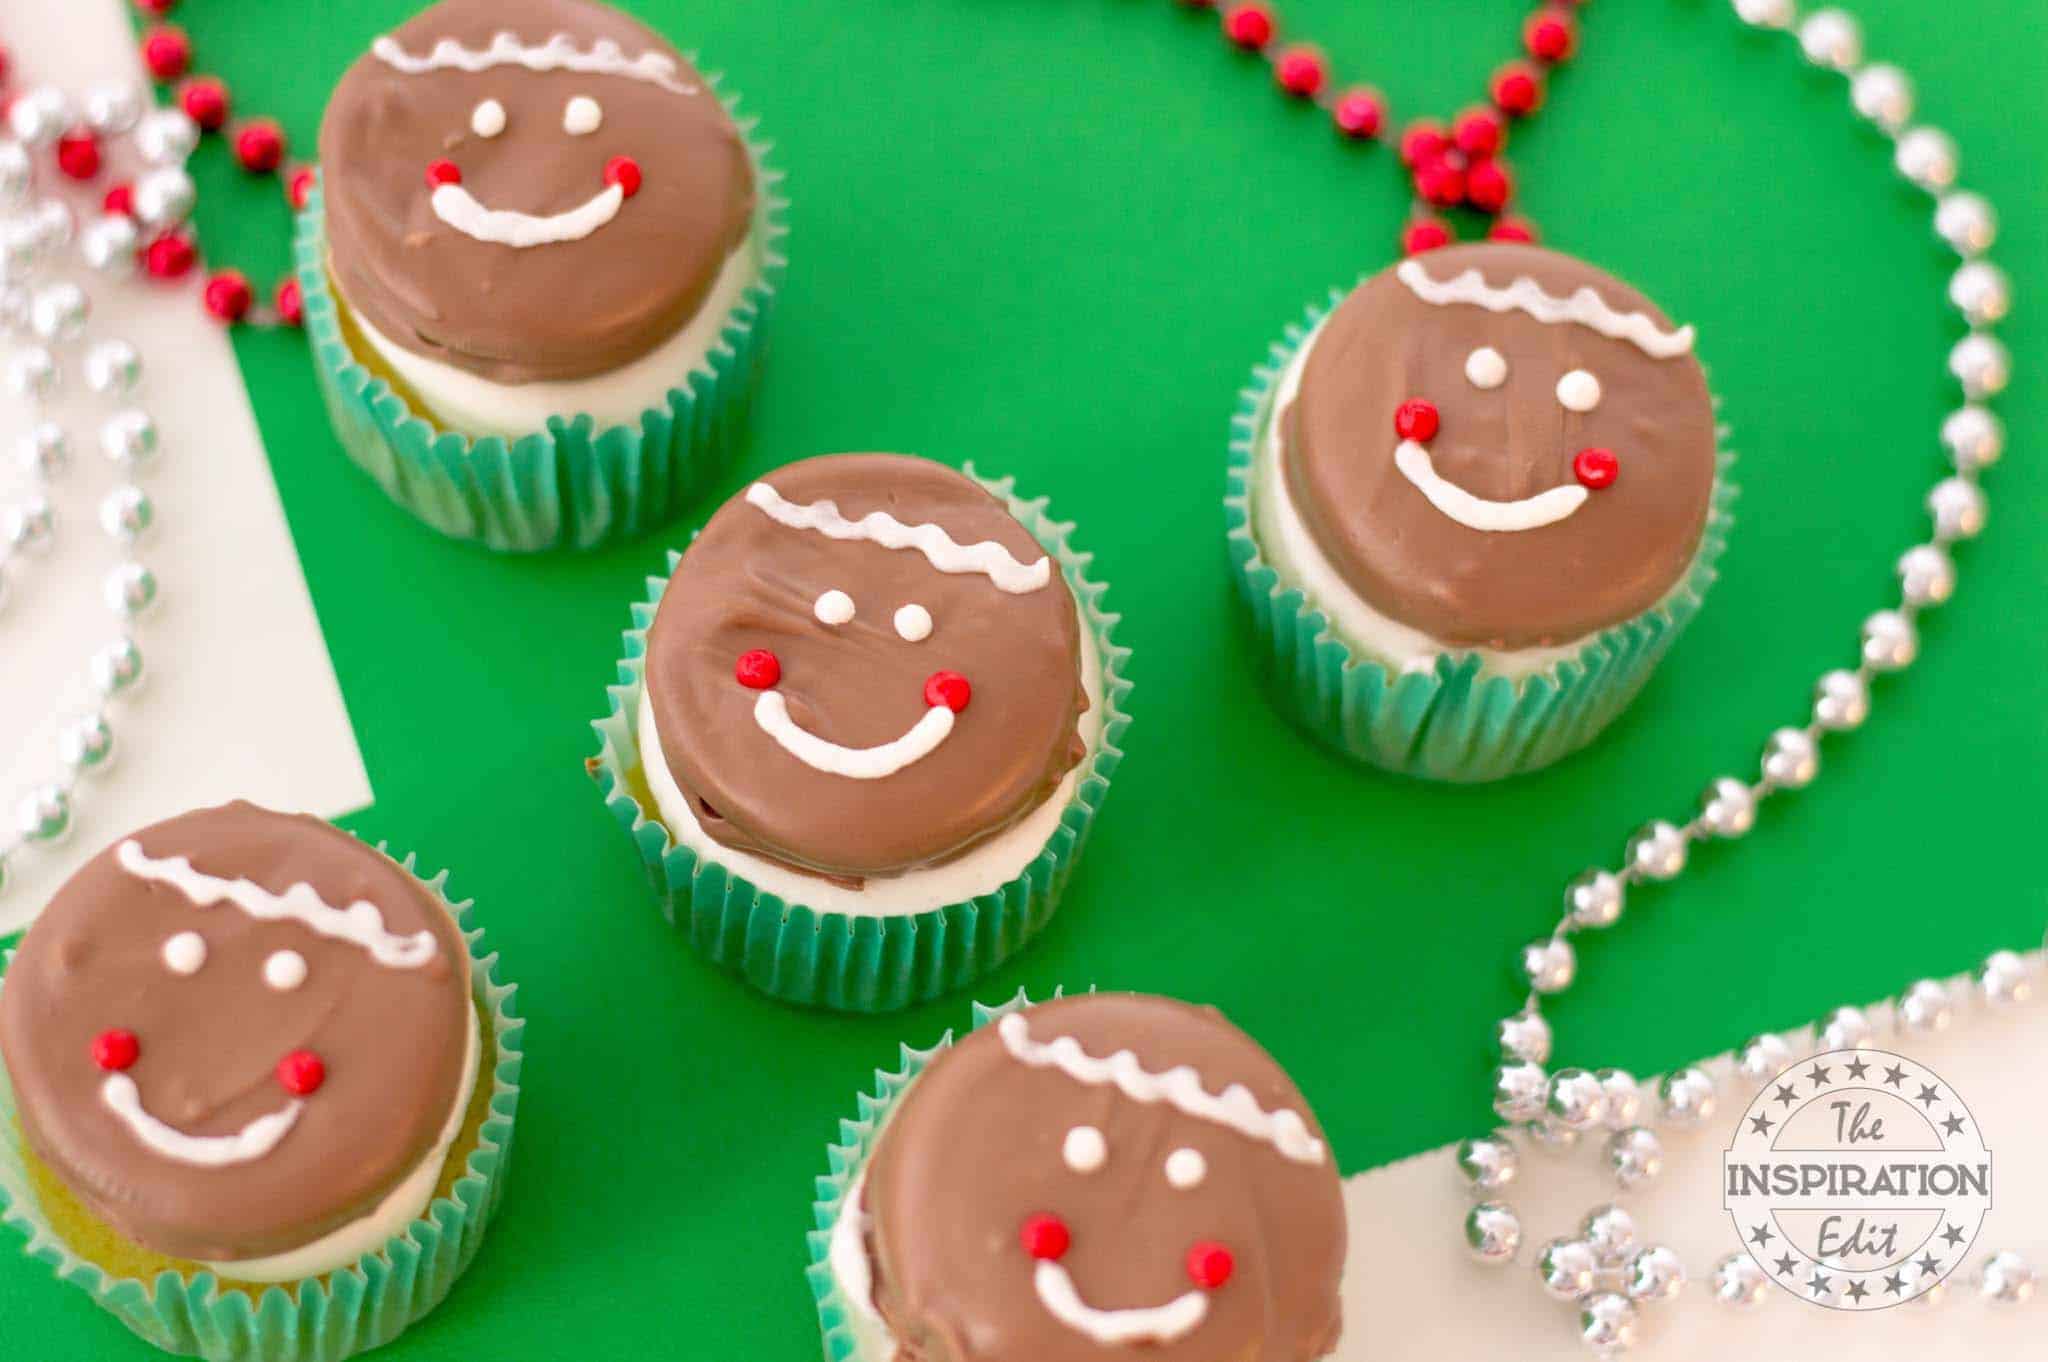 Ginger and chocolate mousse cake - Recipes - delicious.com.au